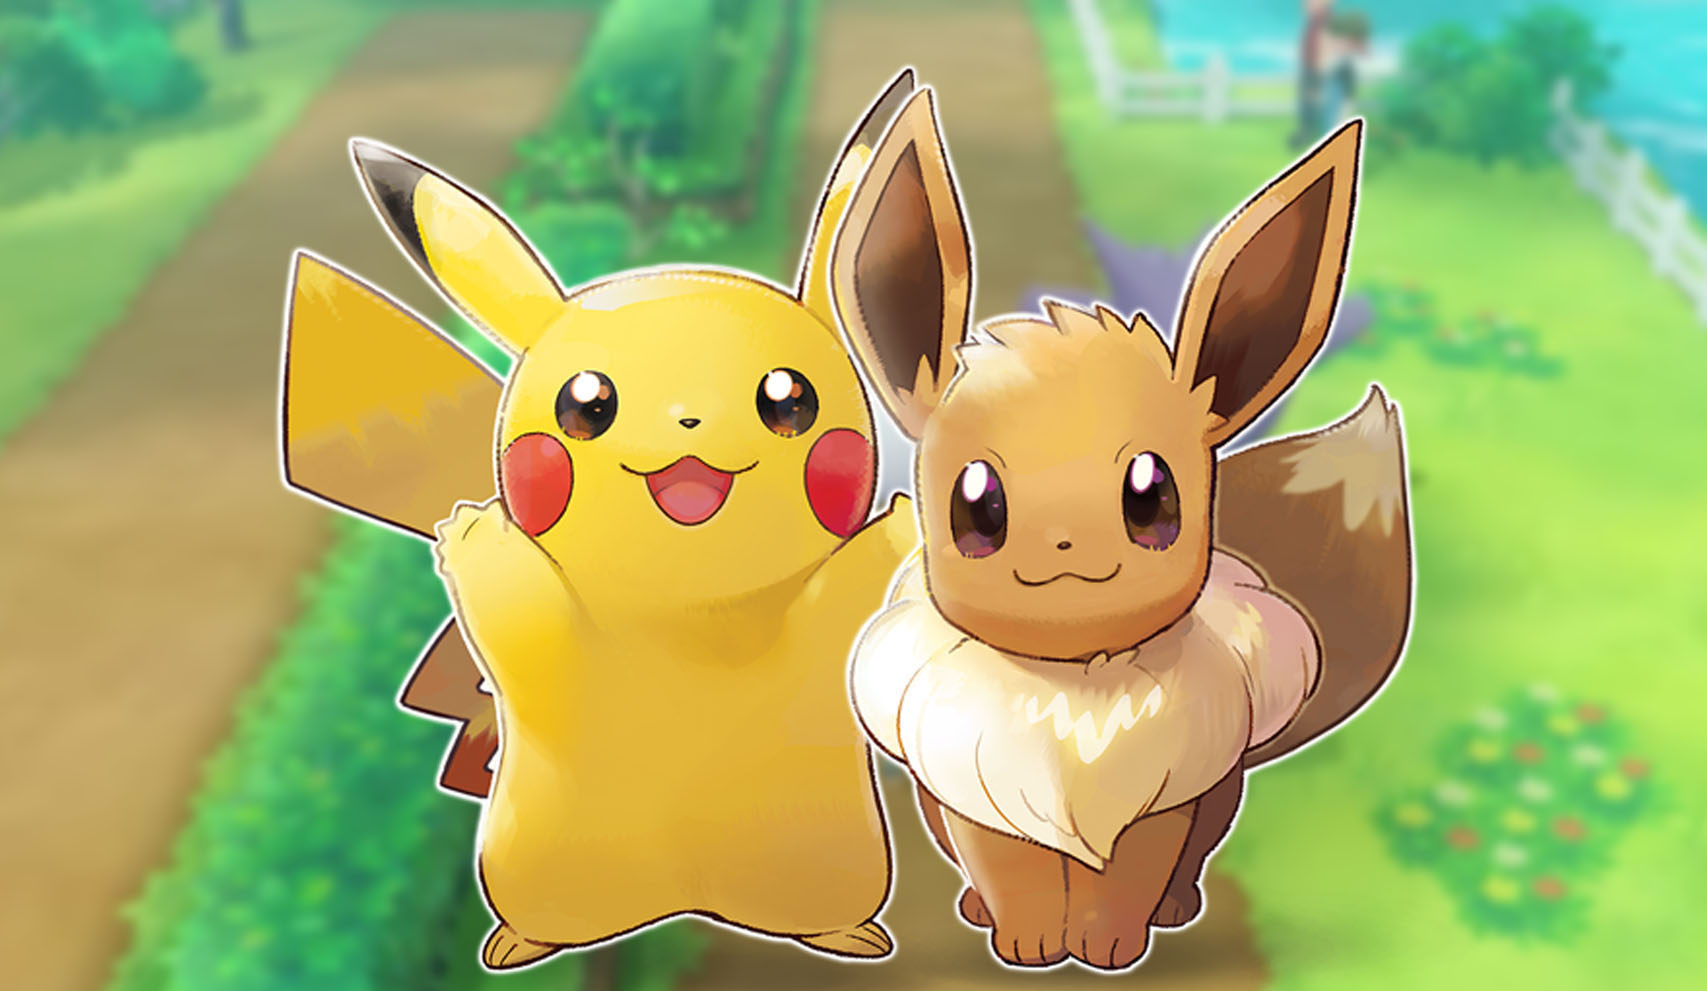 Banner Pokemon LetsGo Pikachu Eevee Illustrations